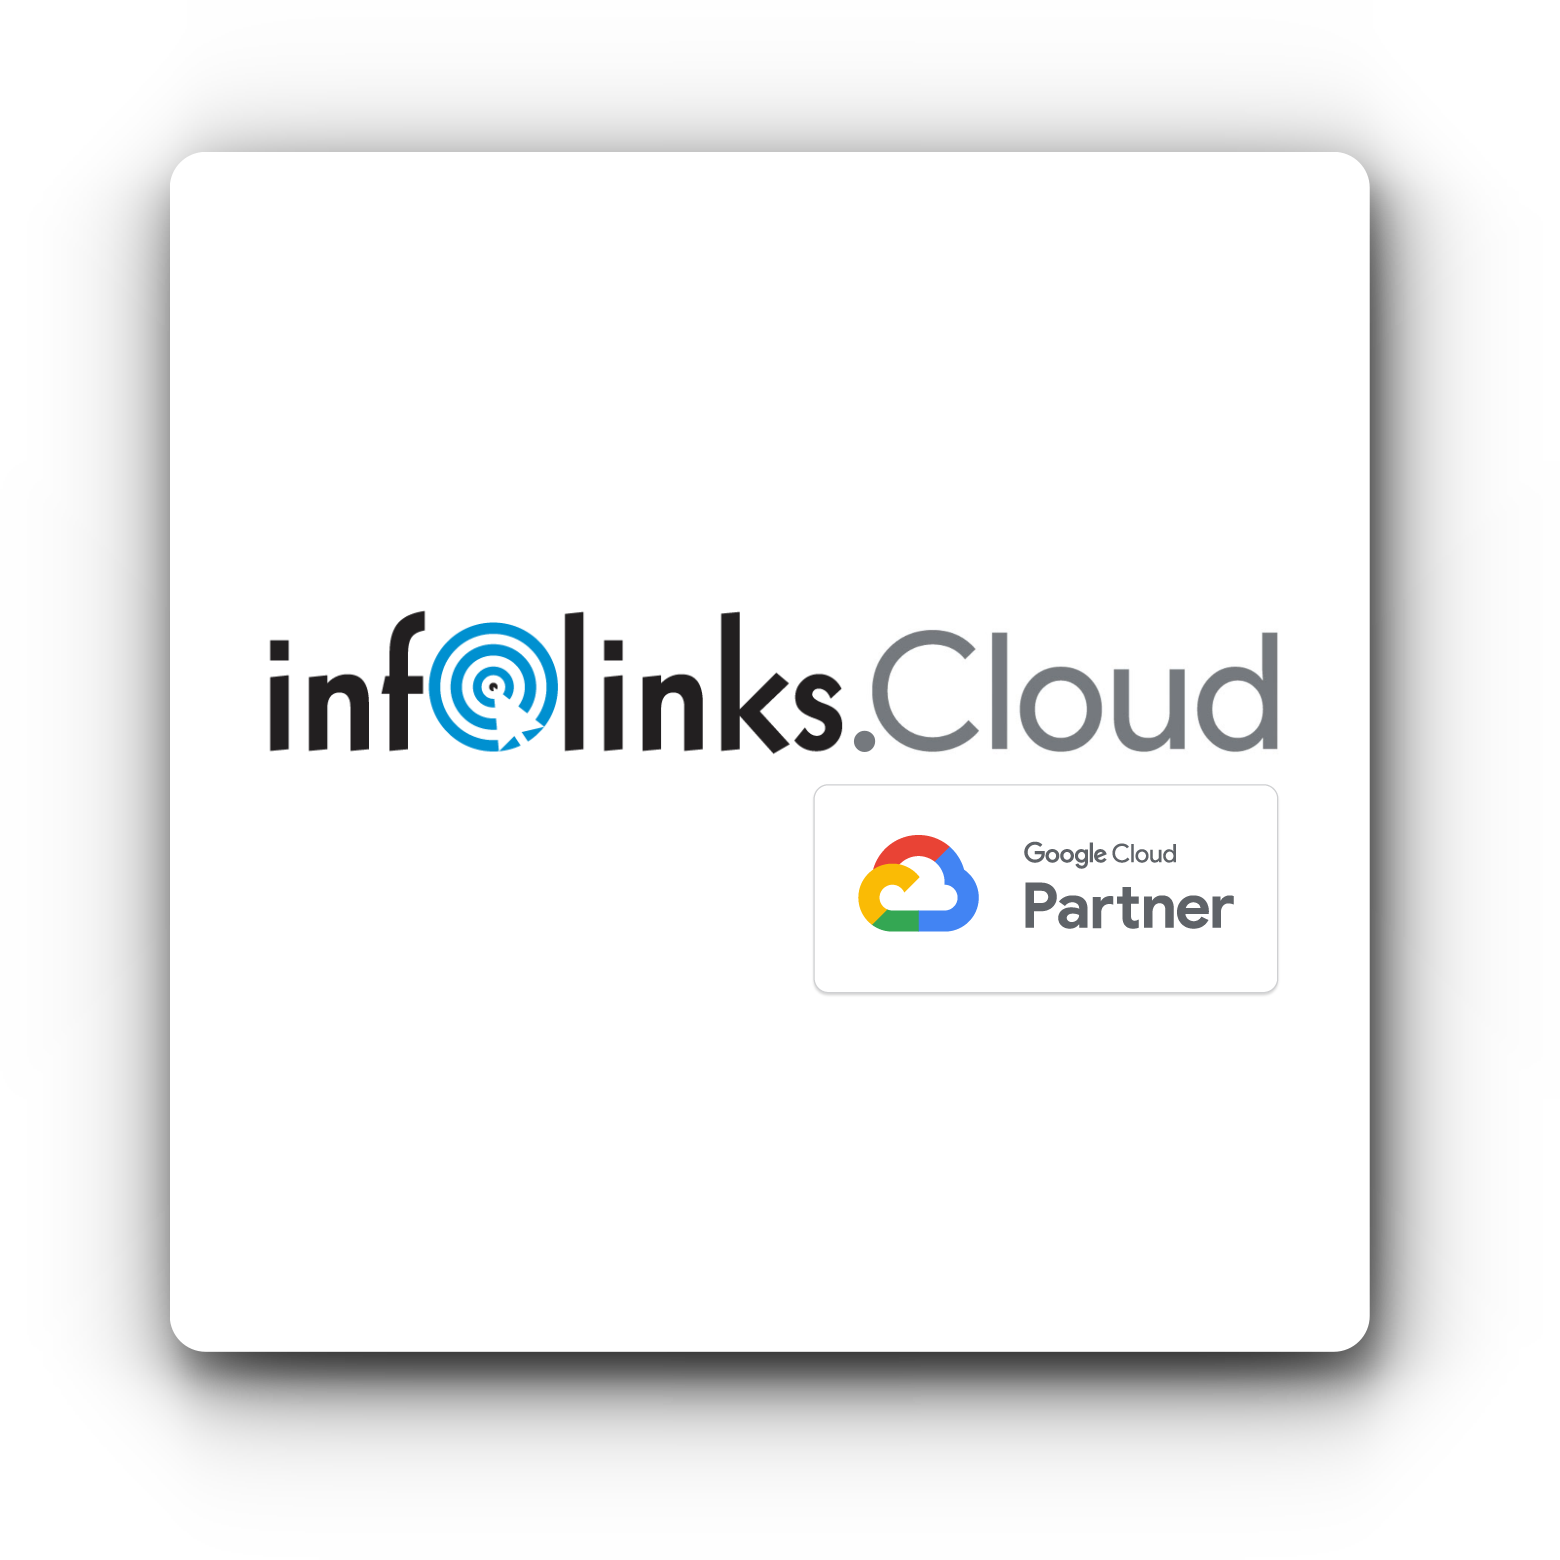 Infolinks Cloud - Official G Suite Partner